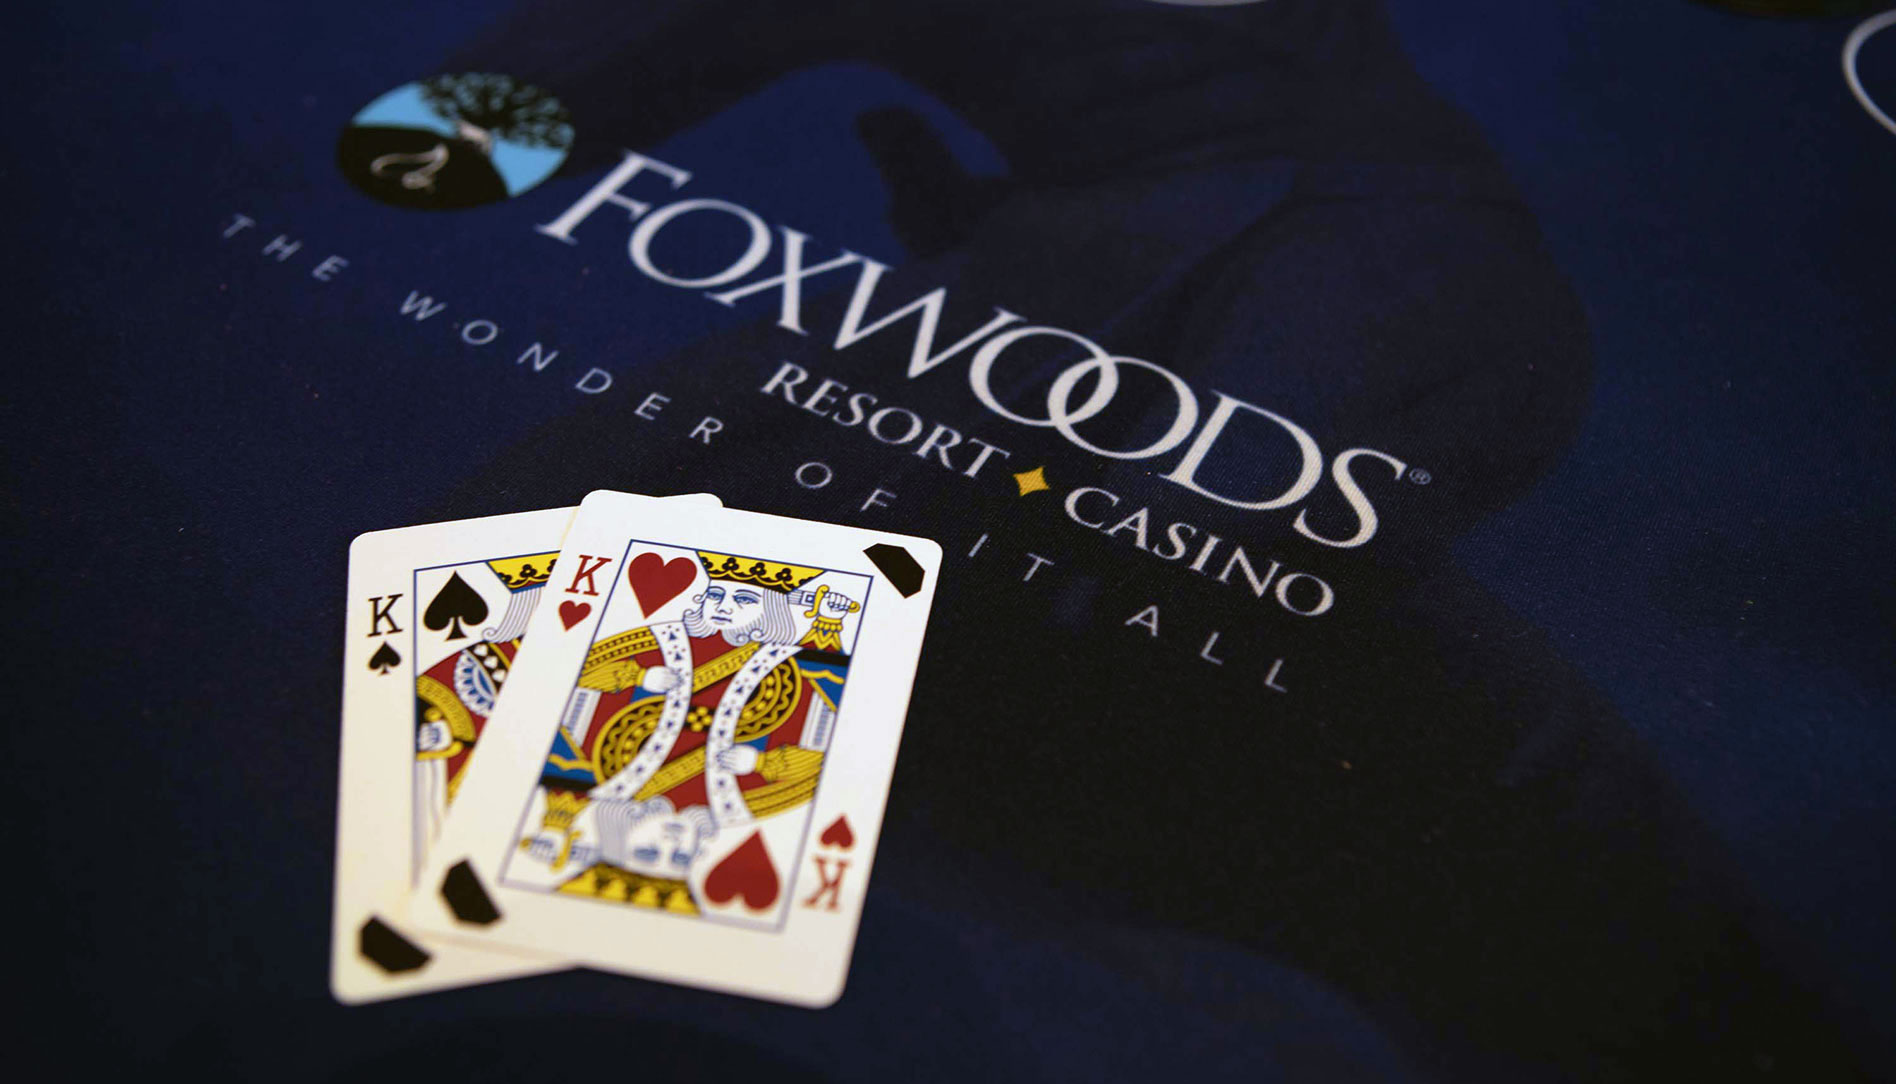 foxwoods casino poker room